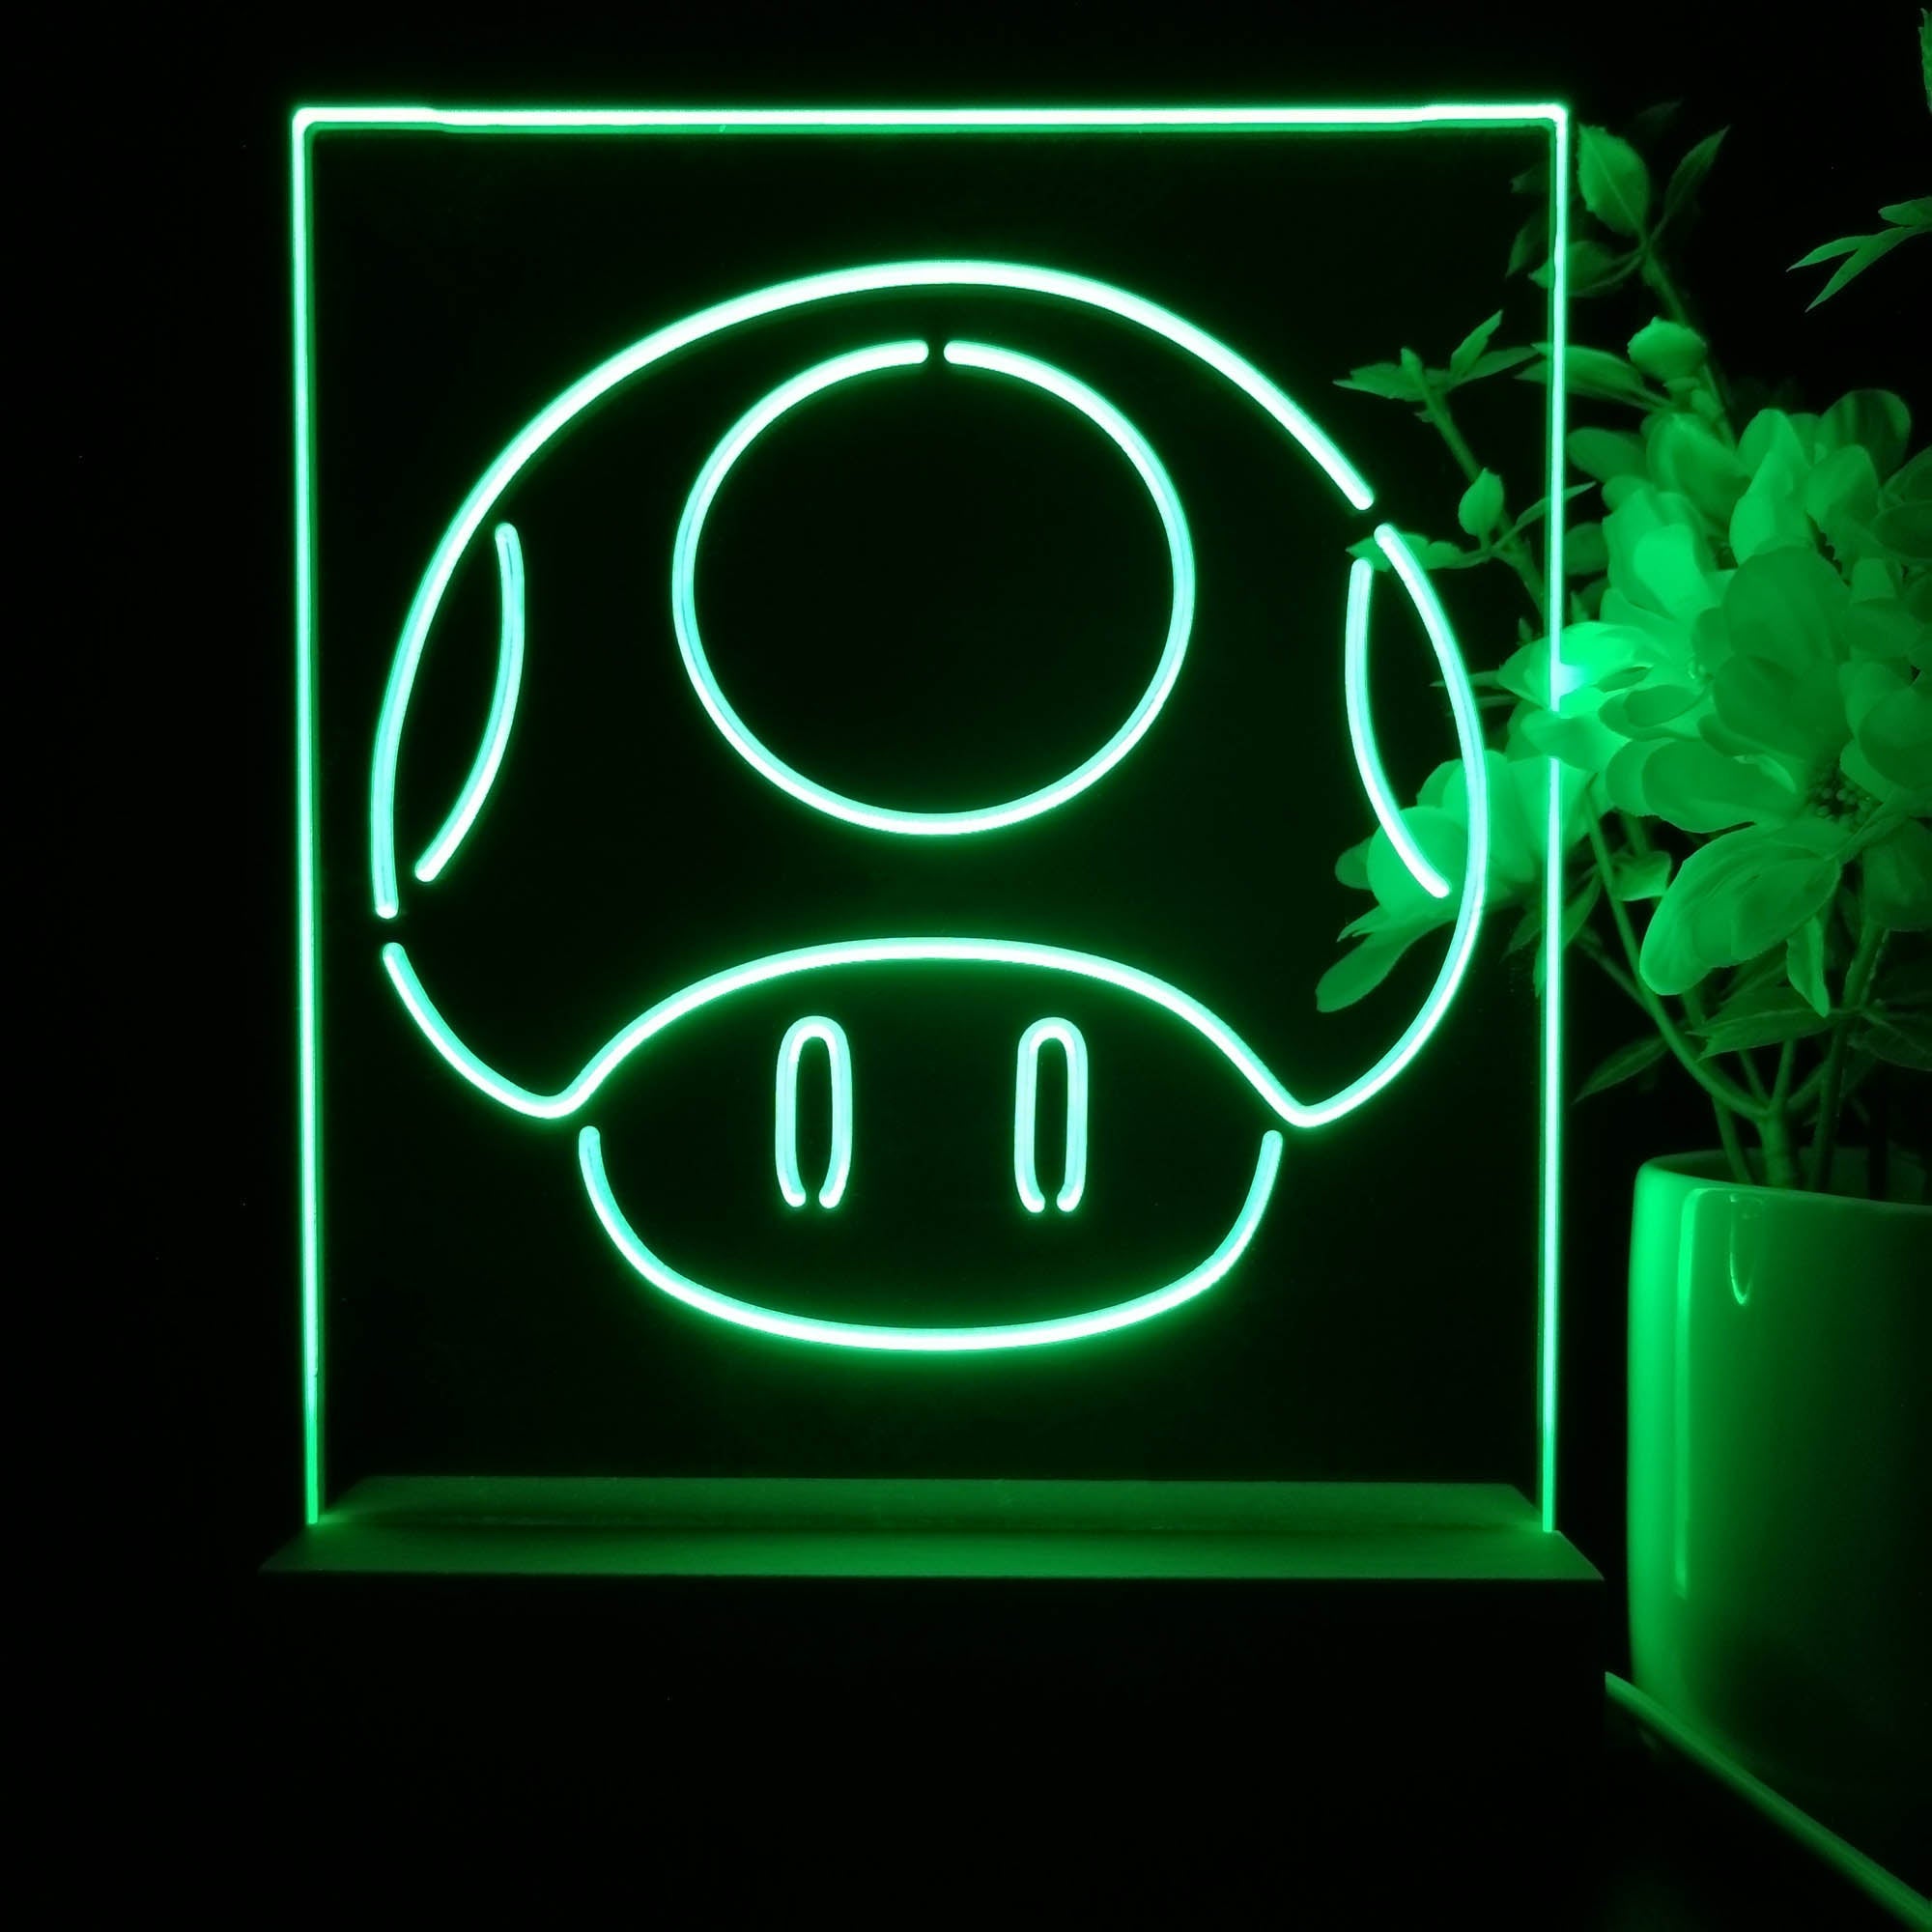 Mario Mushroom Game Room LED Sign Lamp Display